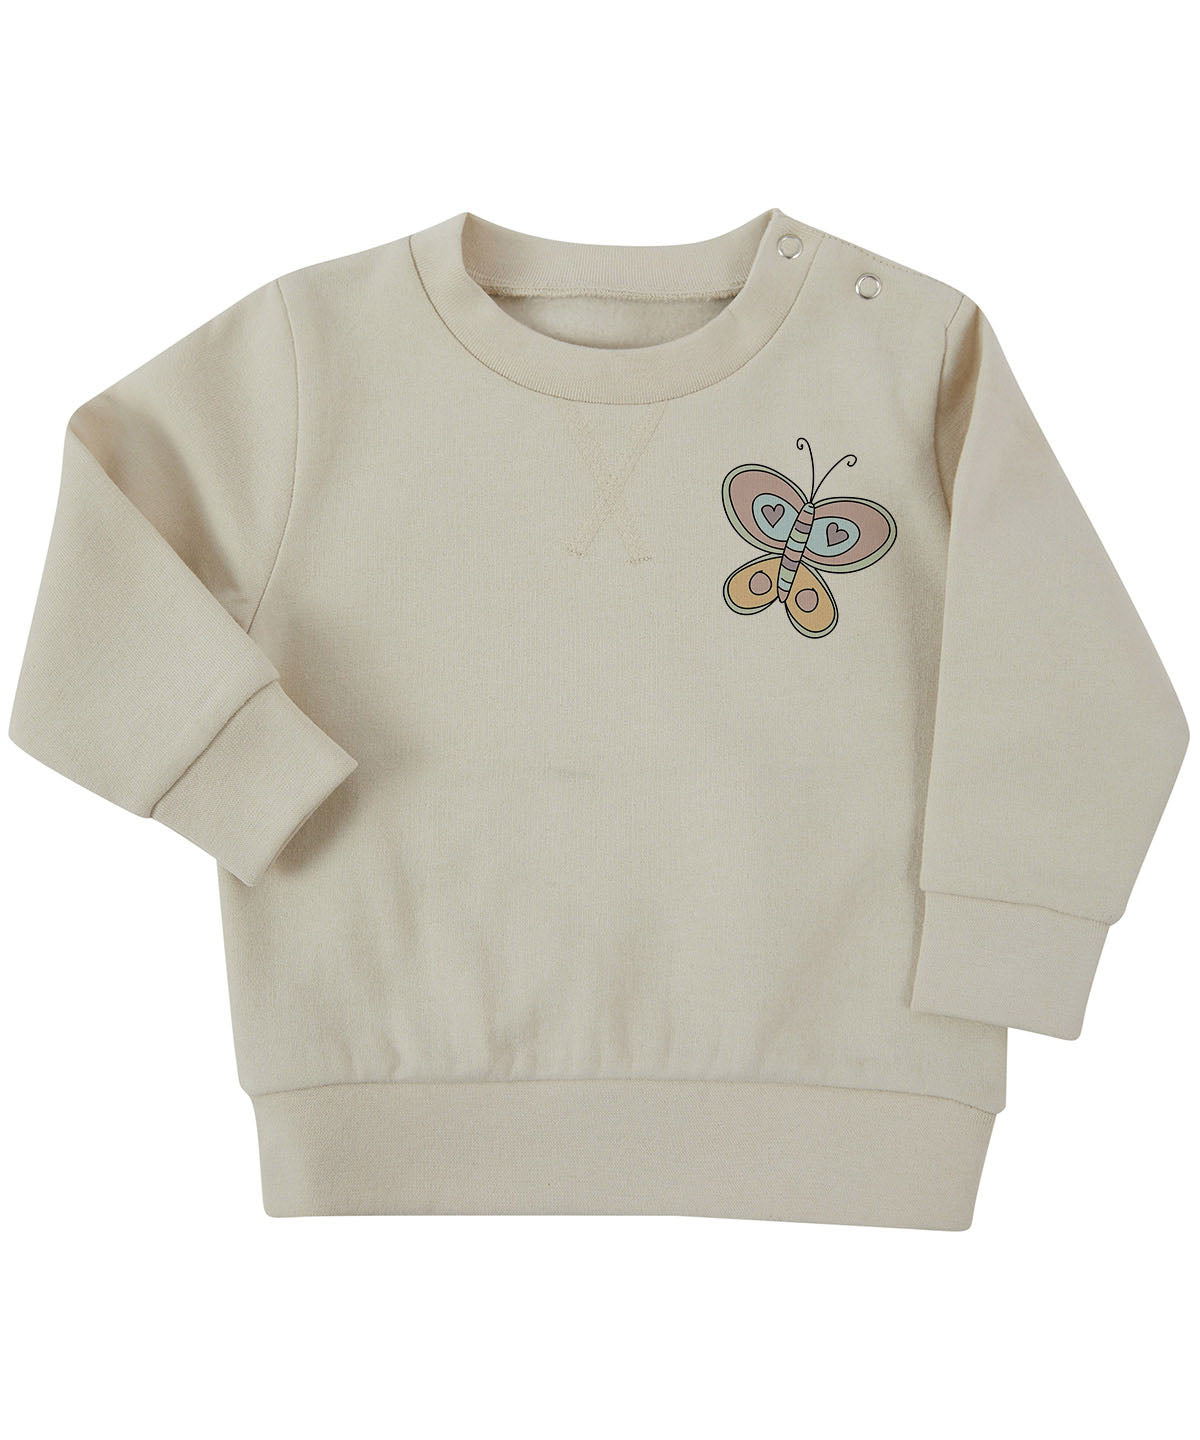 Soft Pink Butterfly Toddler Sweatshirt